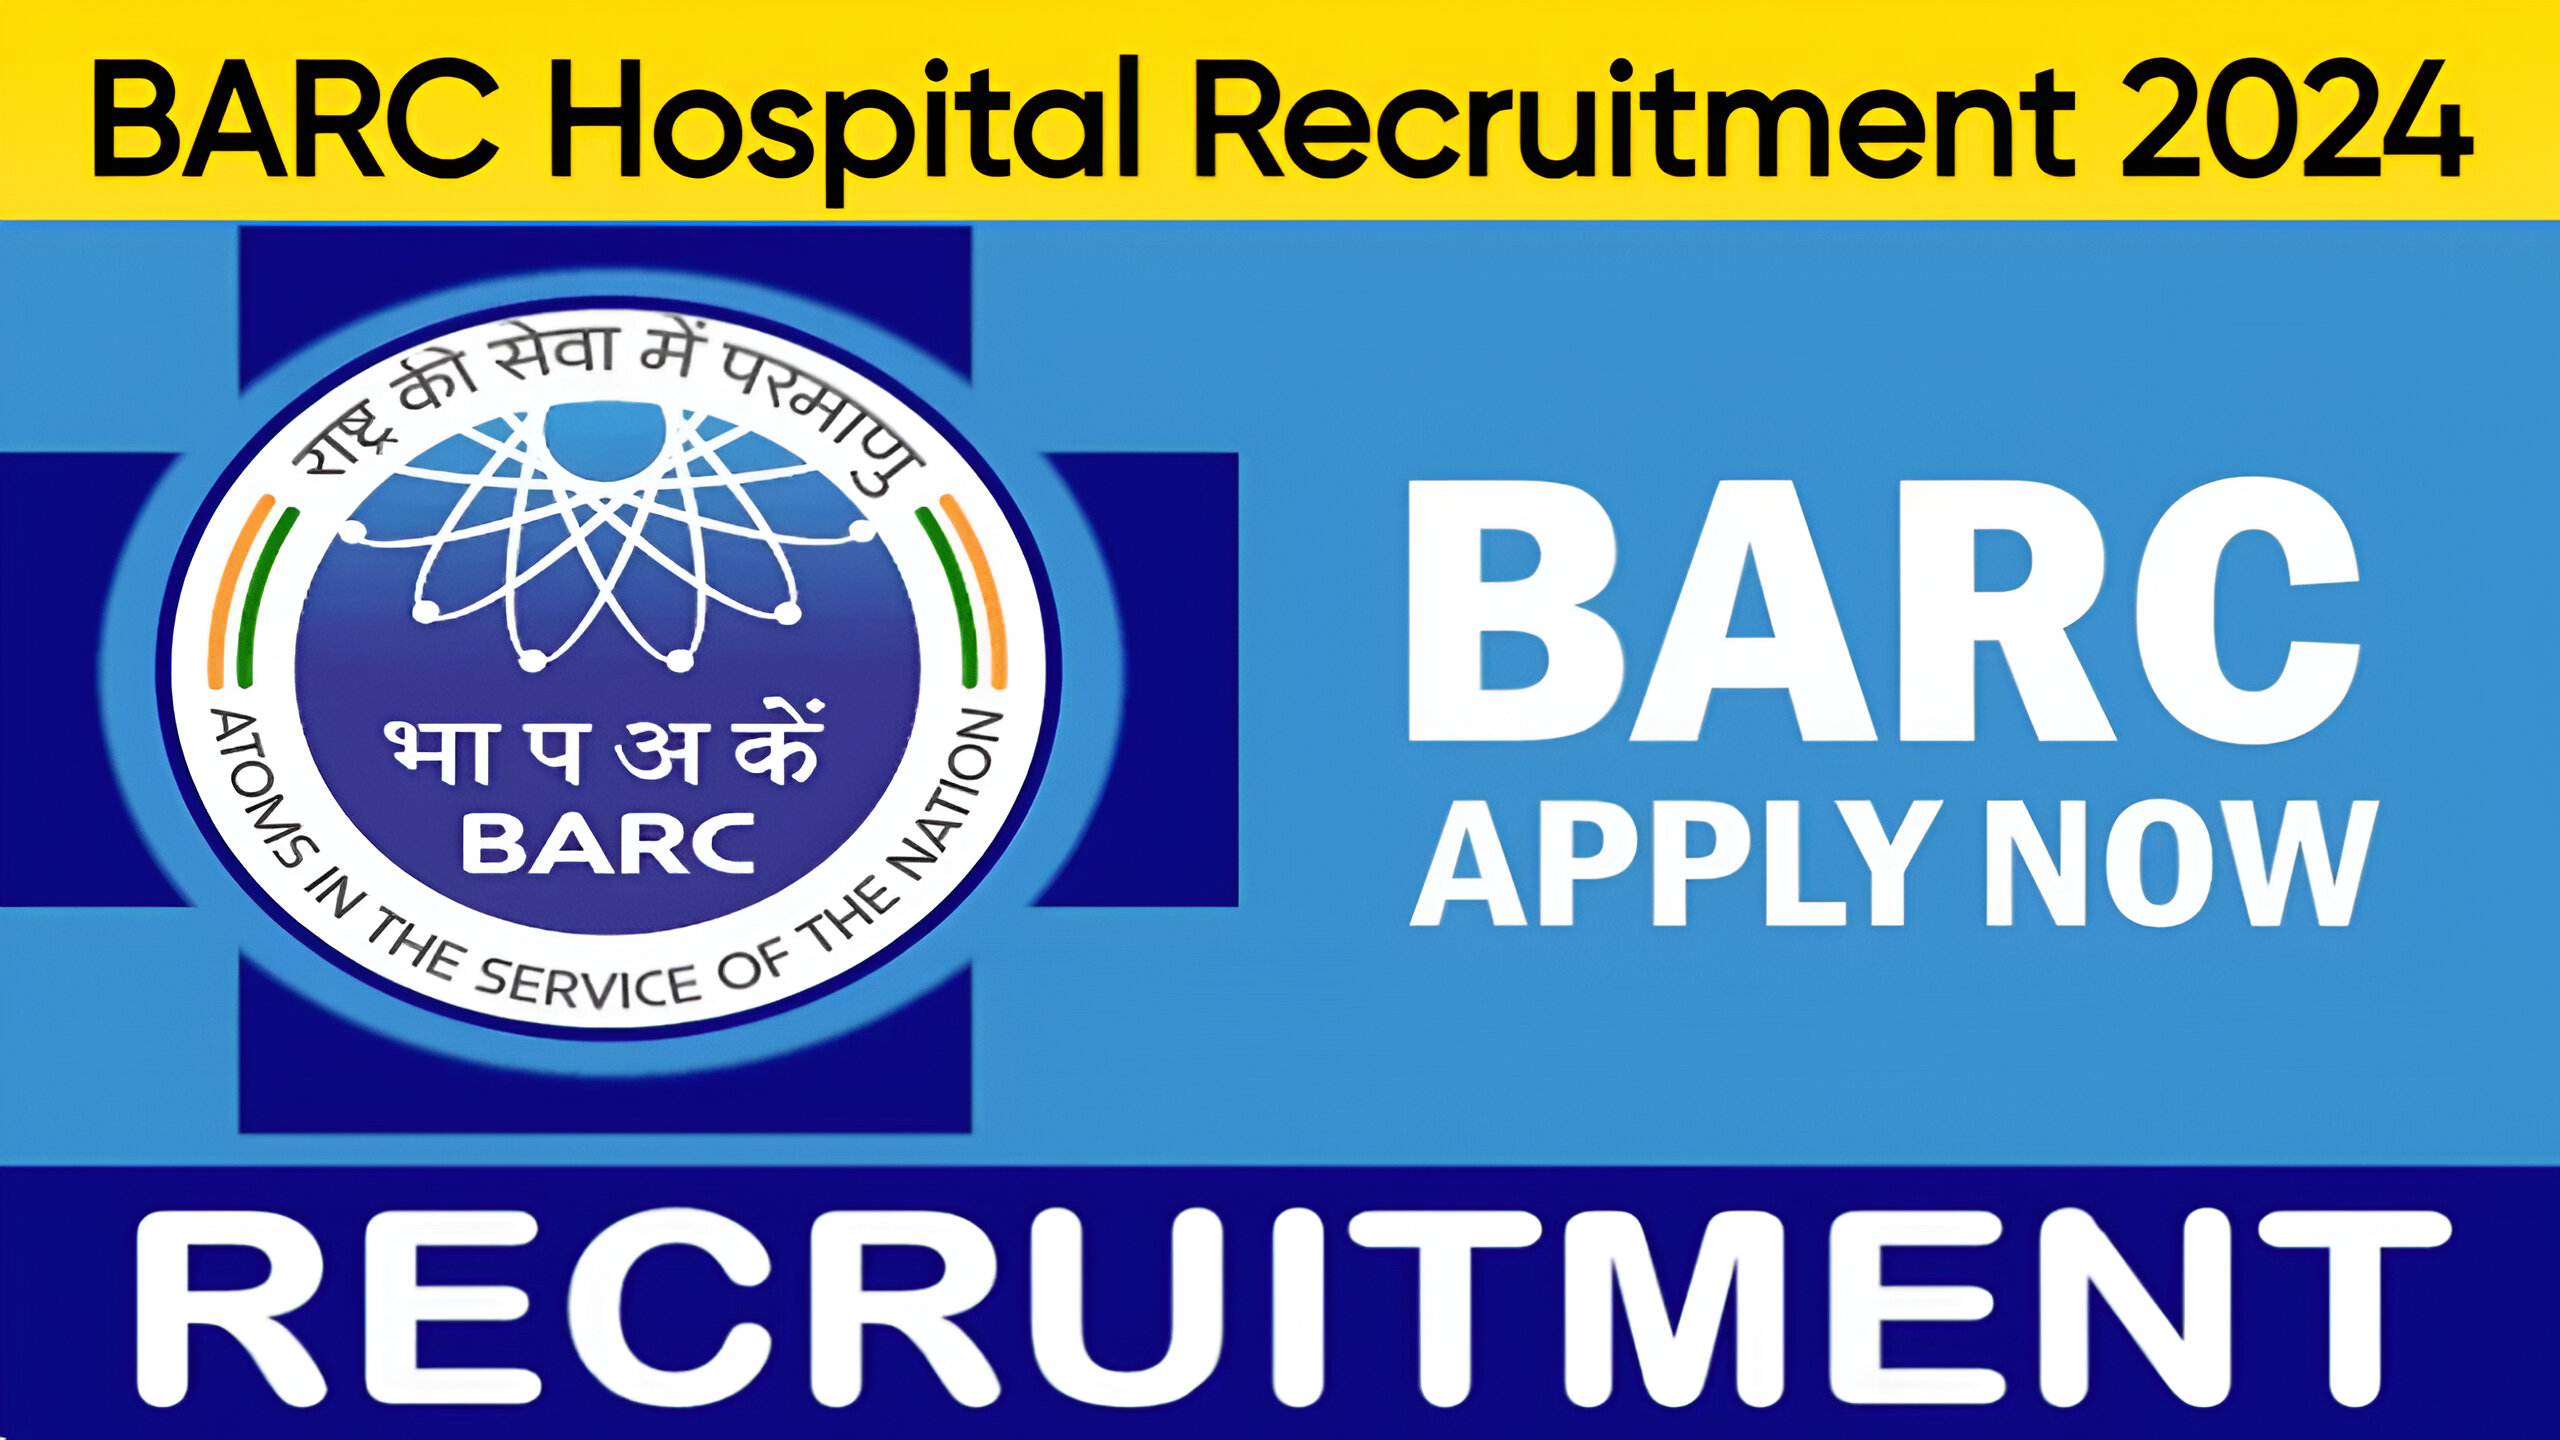 BARC Hospital Recruitment 2024